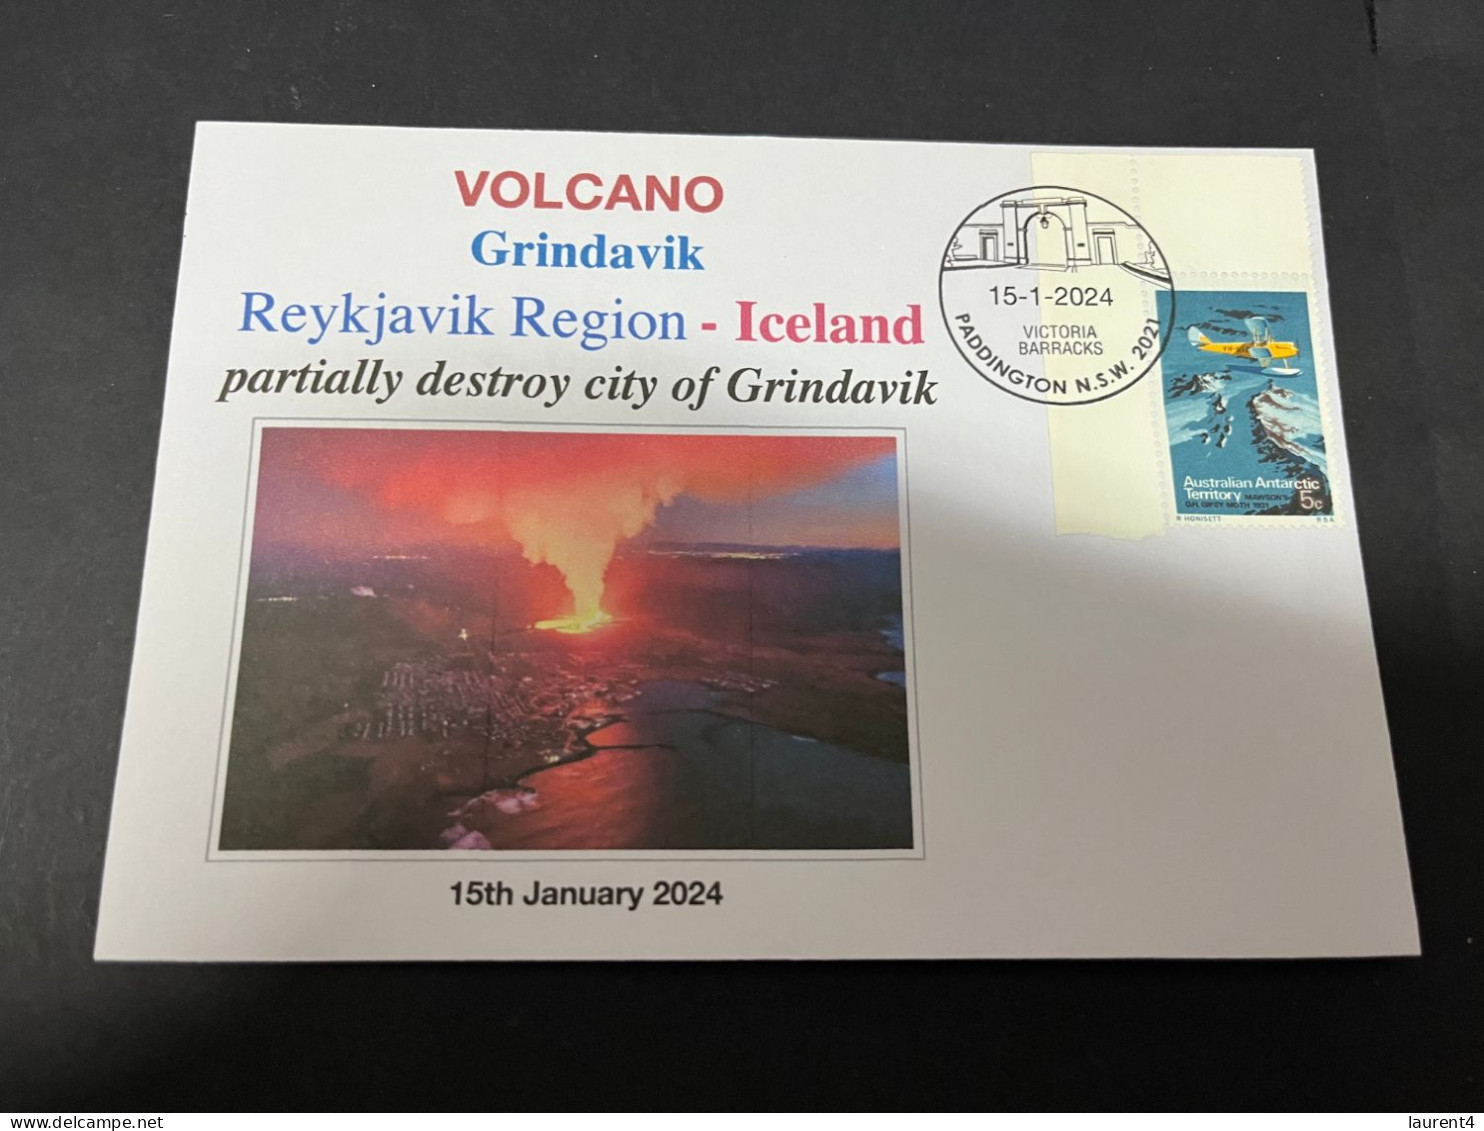 19-1-2024 (1 X 32) Iceland - Volcano Erution Partially Destroyed Fishing City Of Grindavik - Volcanes